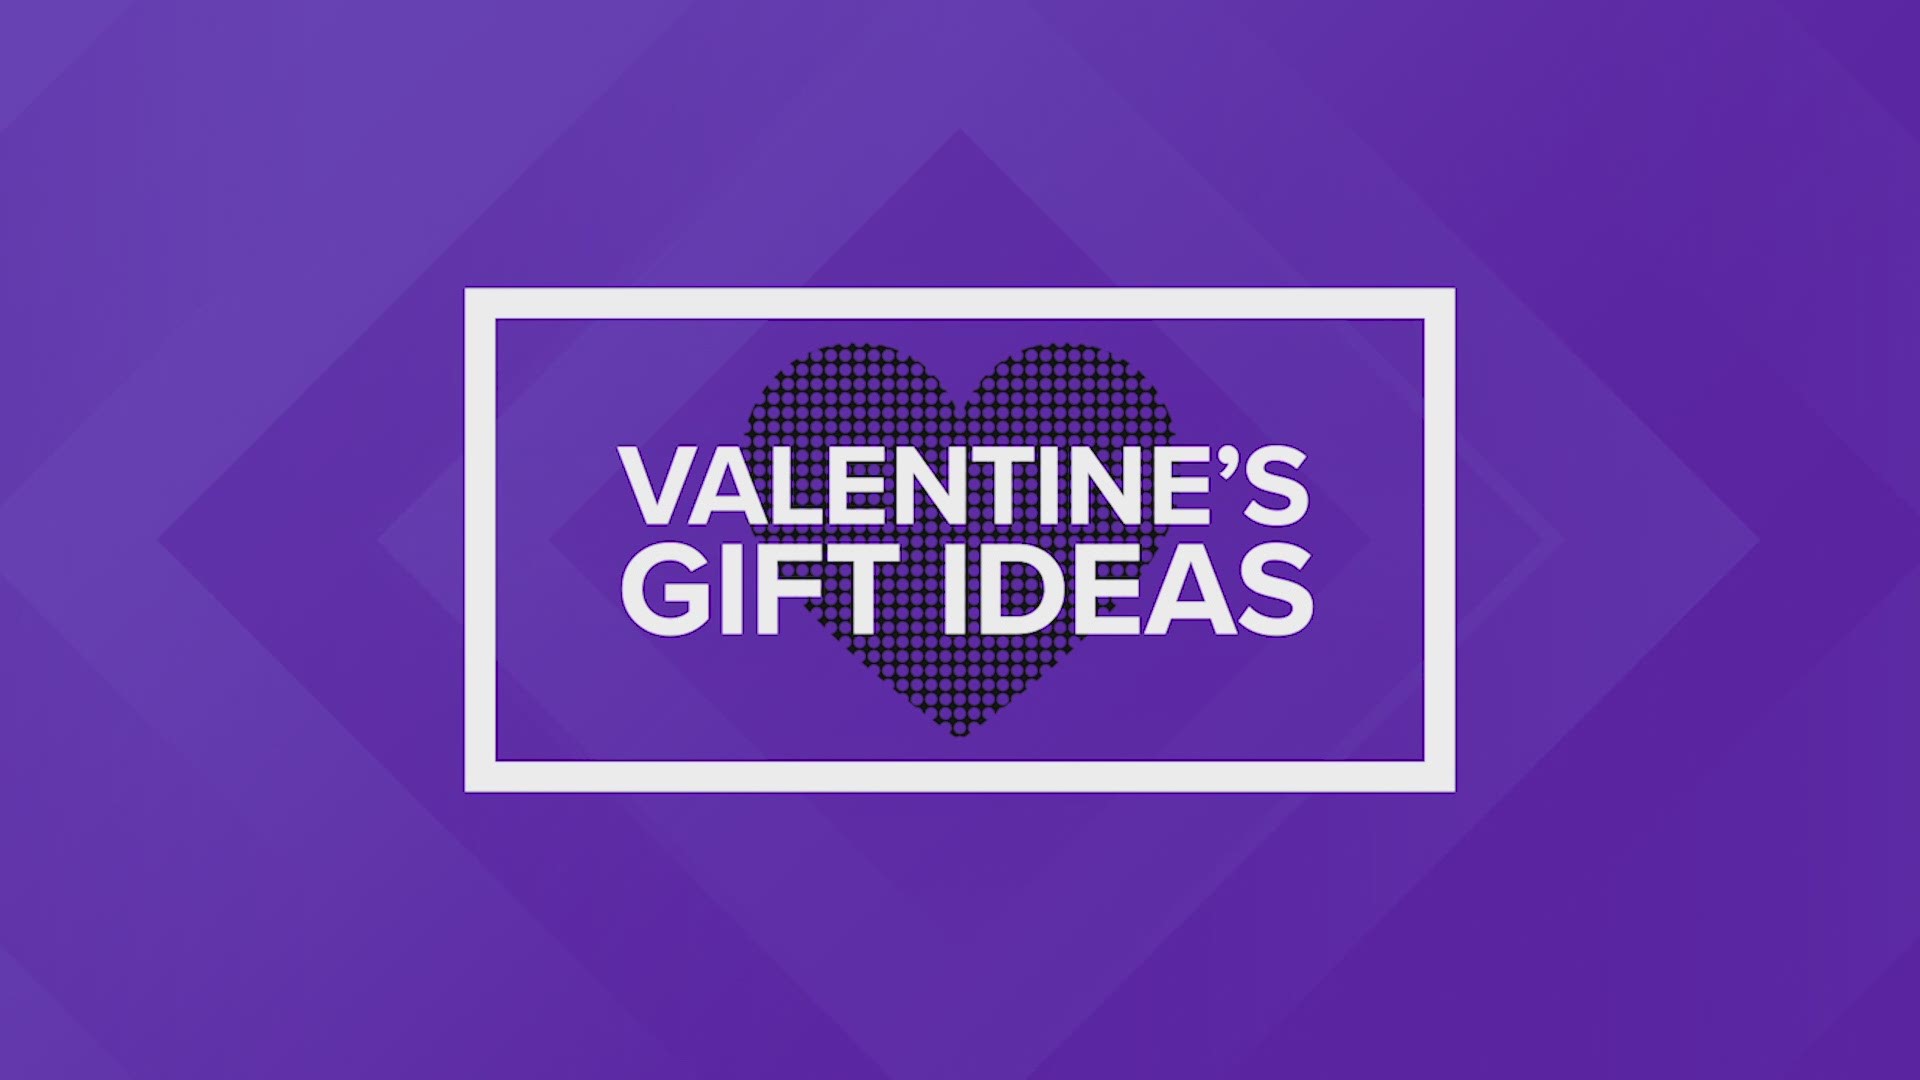 Valentine's gift ideas - Ultimate Chocolates